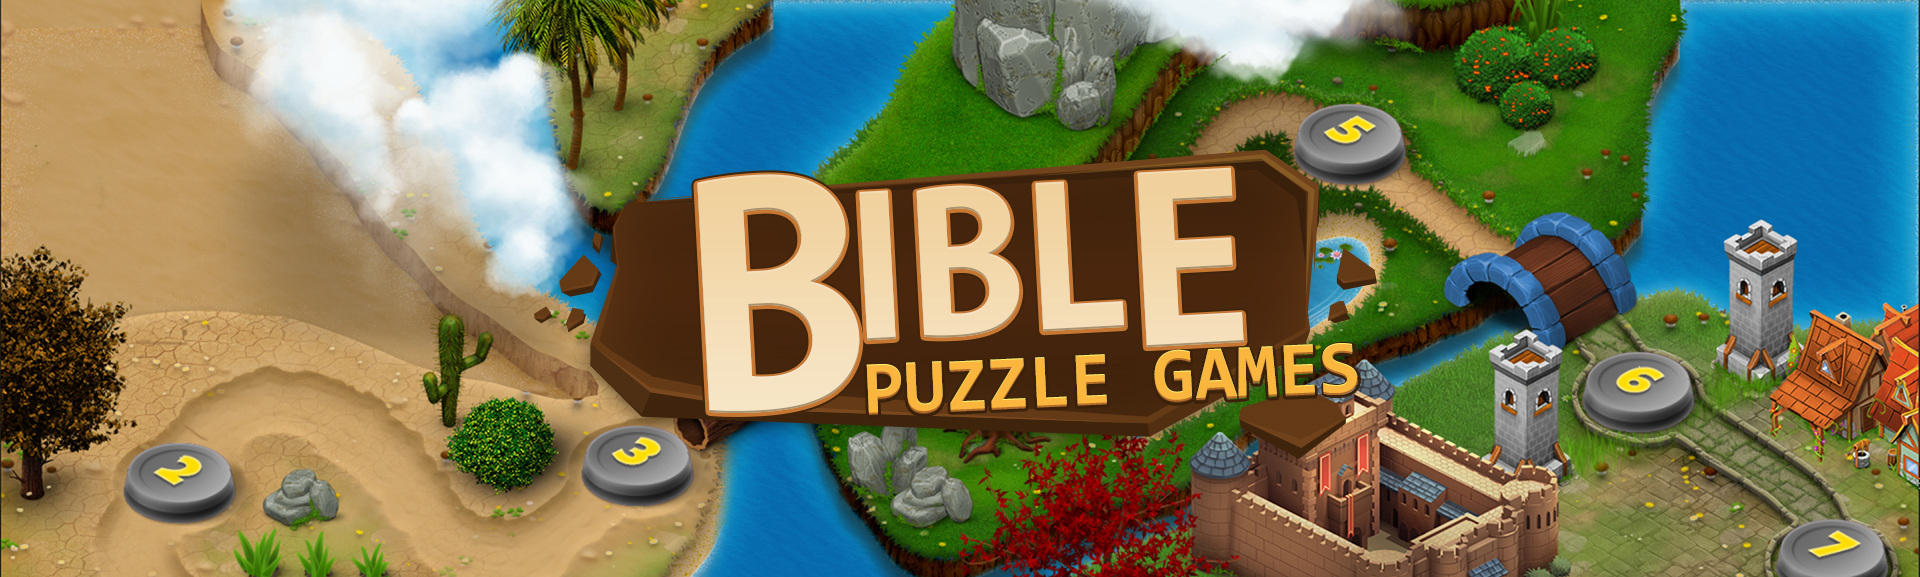 Bible Puzzle Games